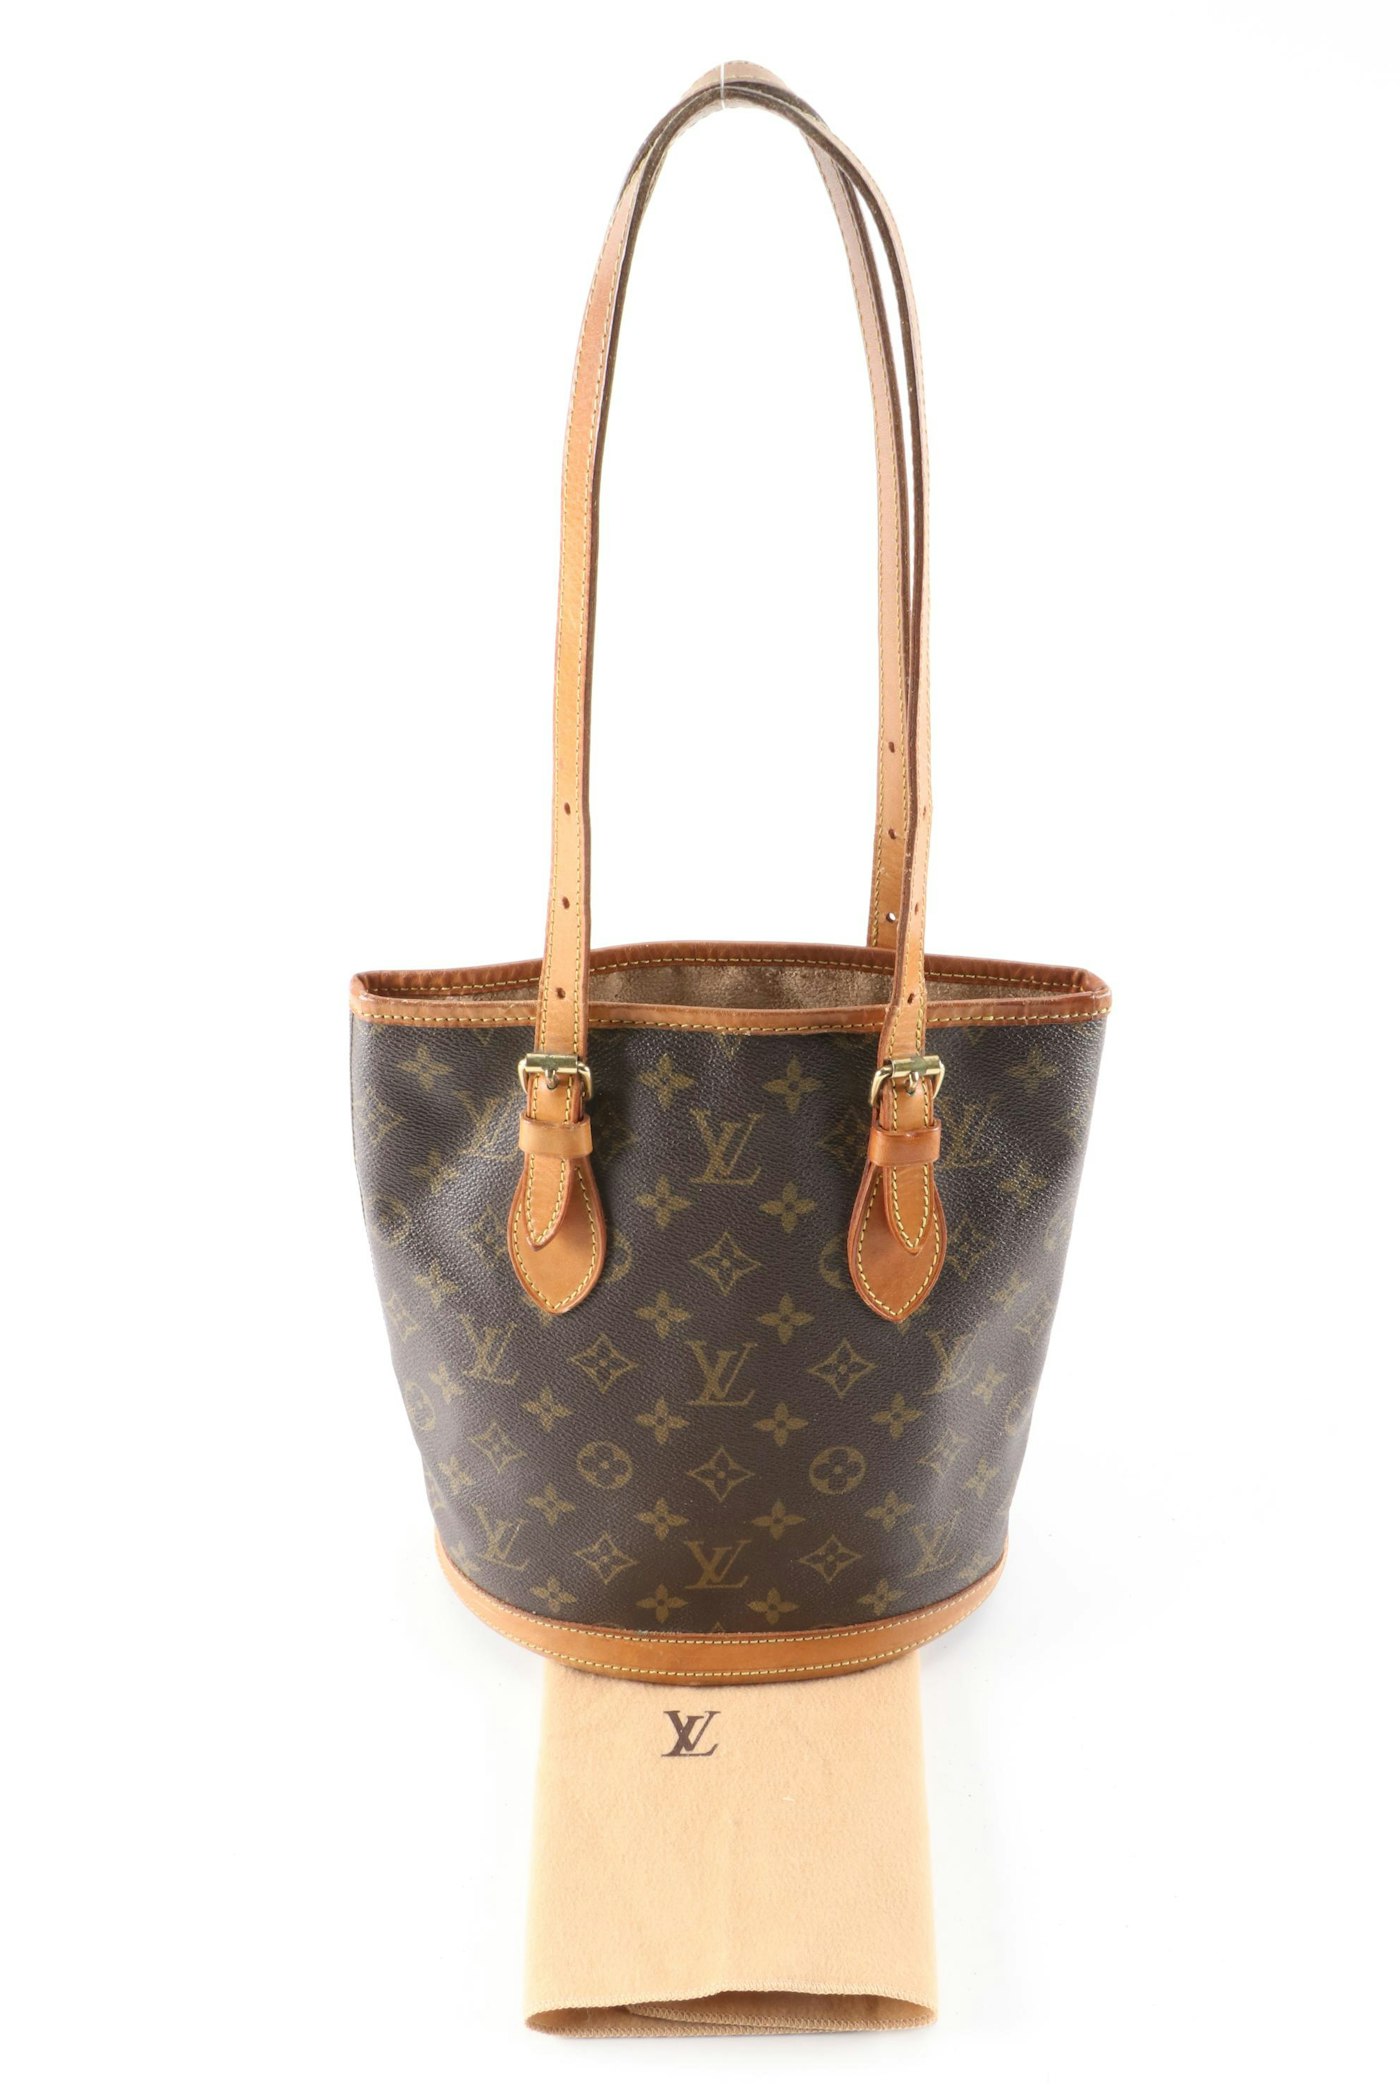 Louis Vuitton Bucket Bag in Monogram Canvas and Vachetta Leather | EBTH